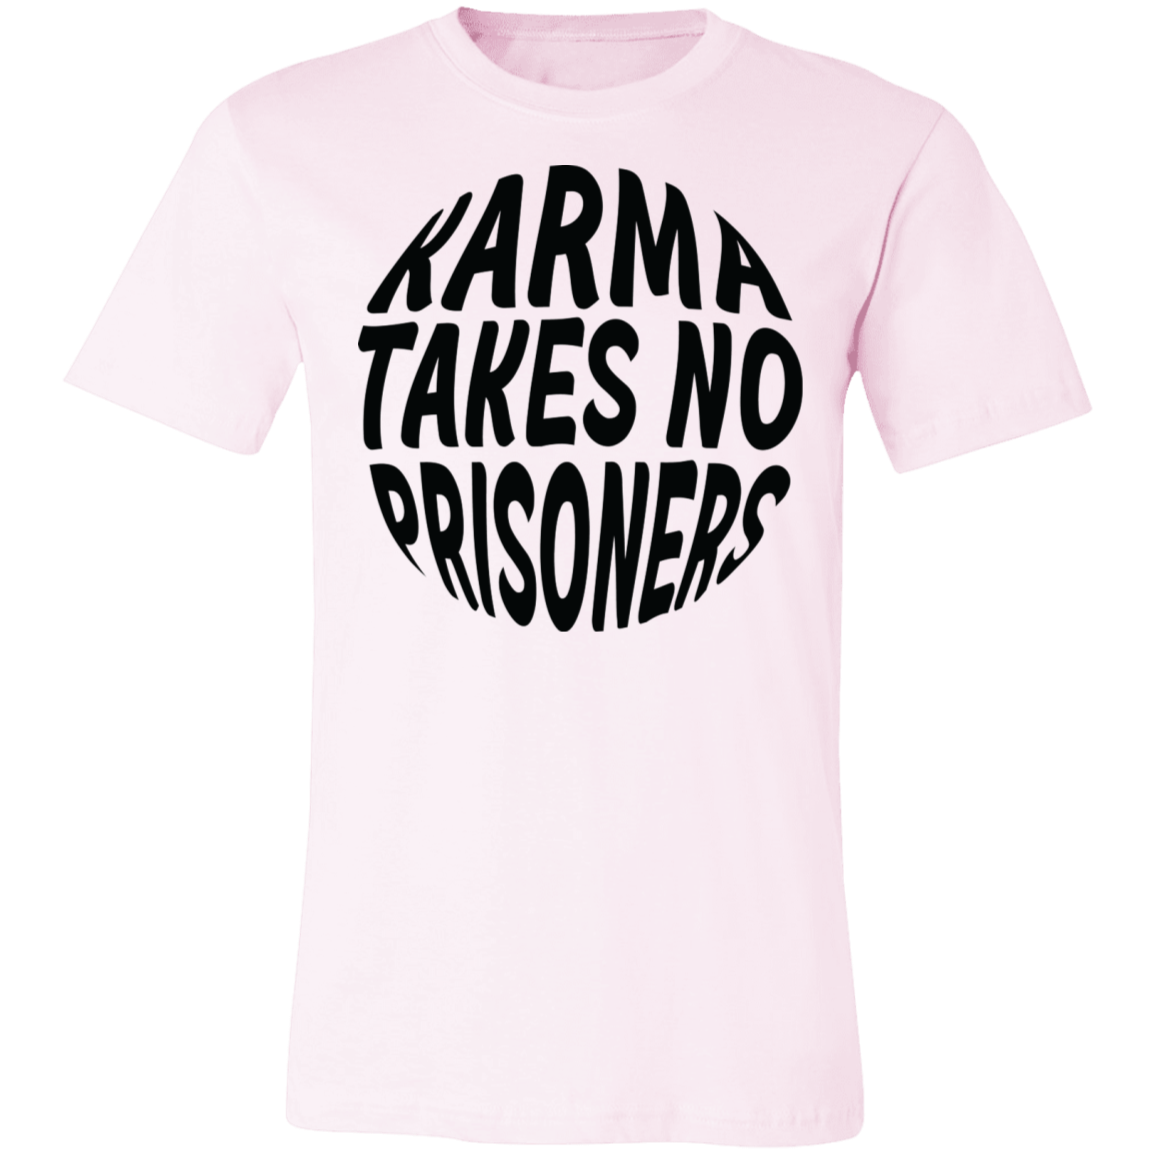 Karma Takes No Prisoners Unisex Tee